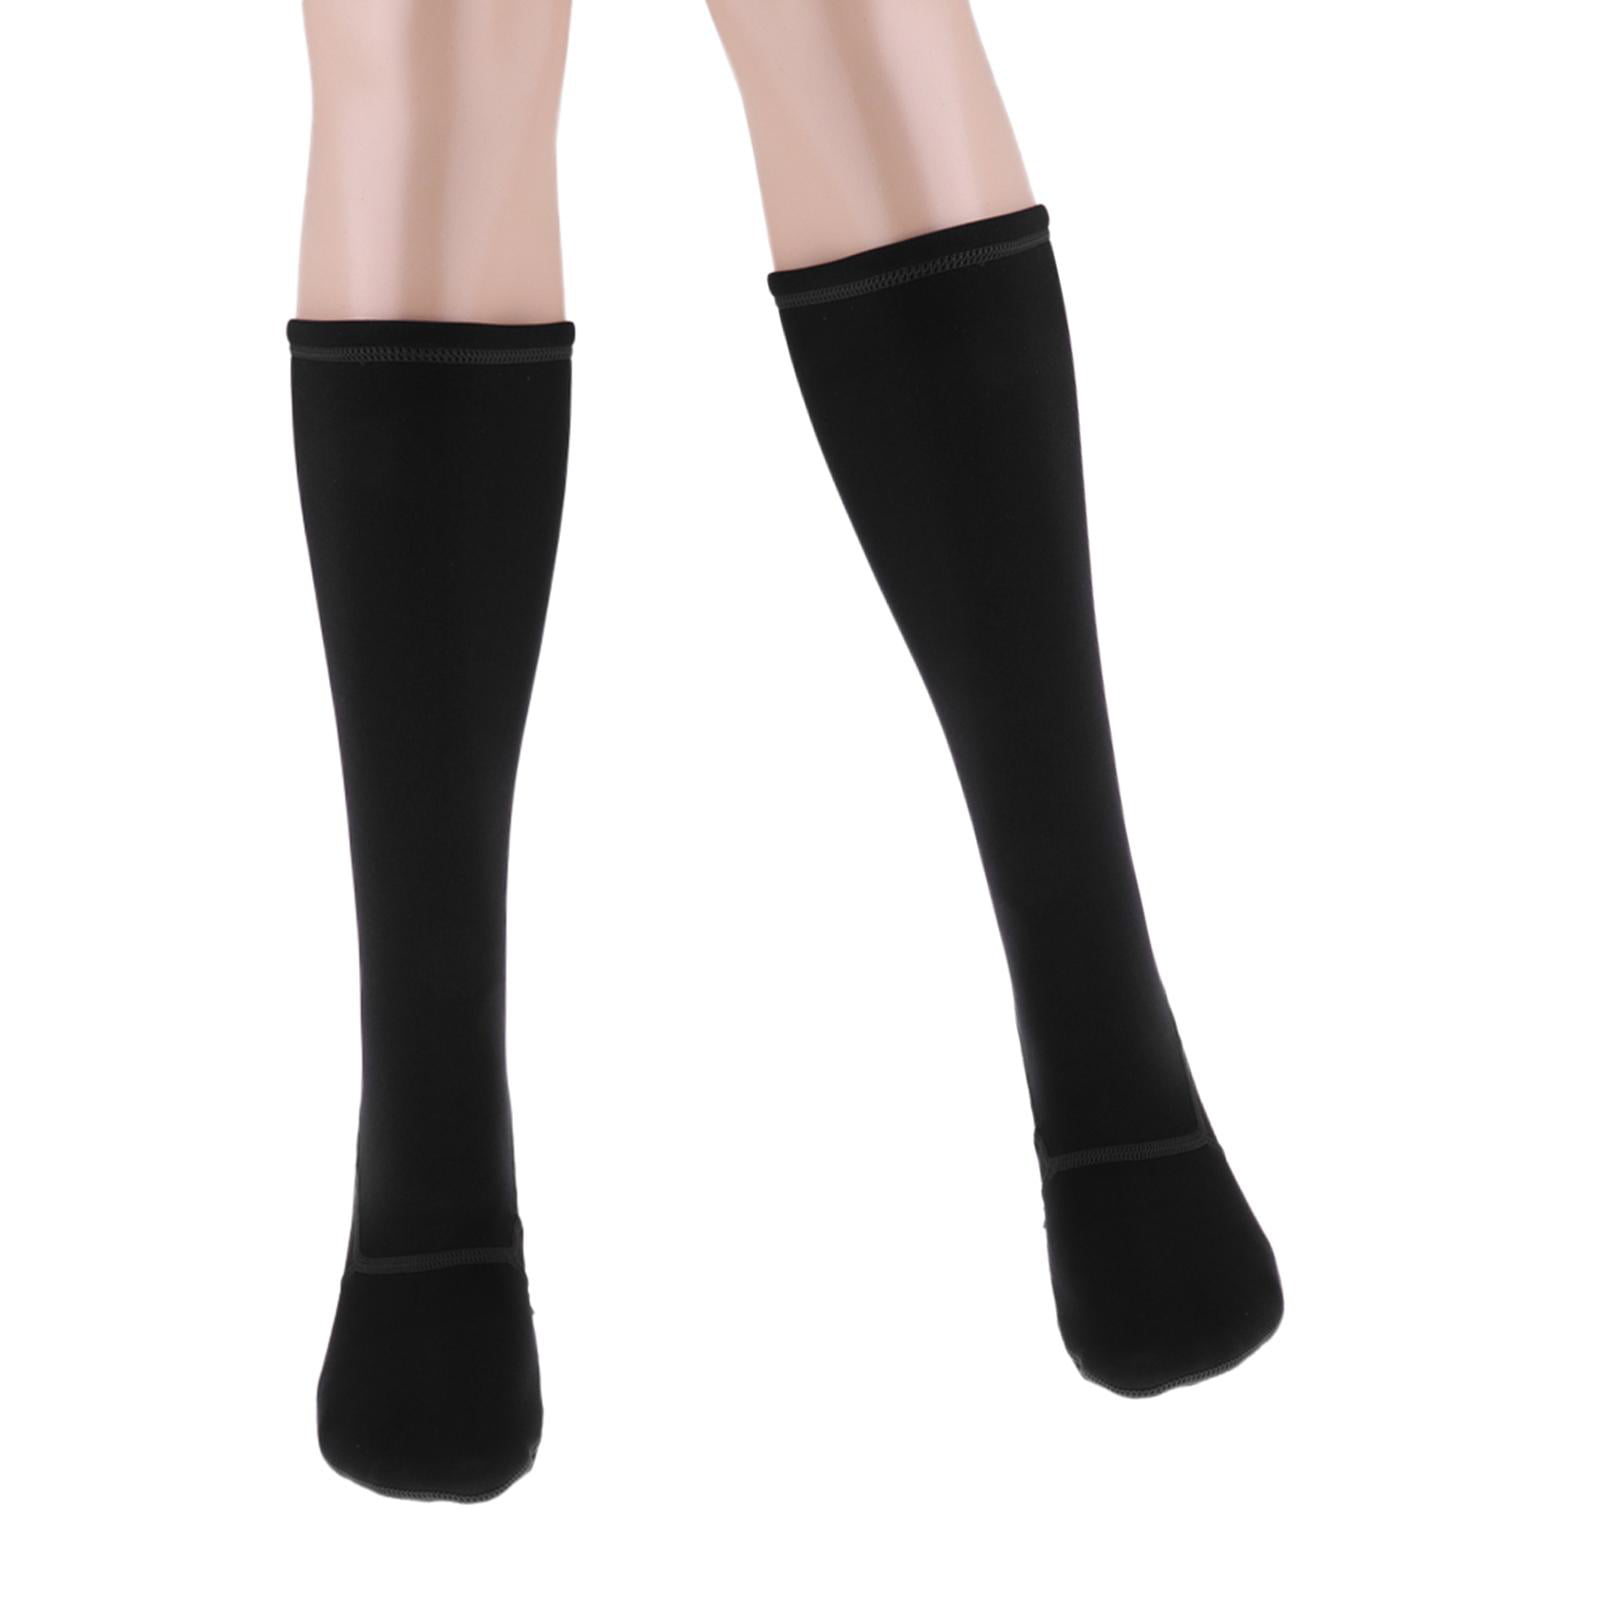 2 Pairs Unisex Neoprene Wetsuit Socks 3mm Diving Stockings Black L and M 